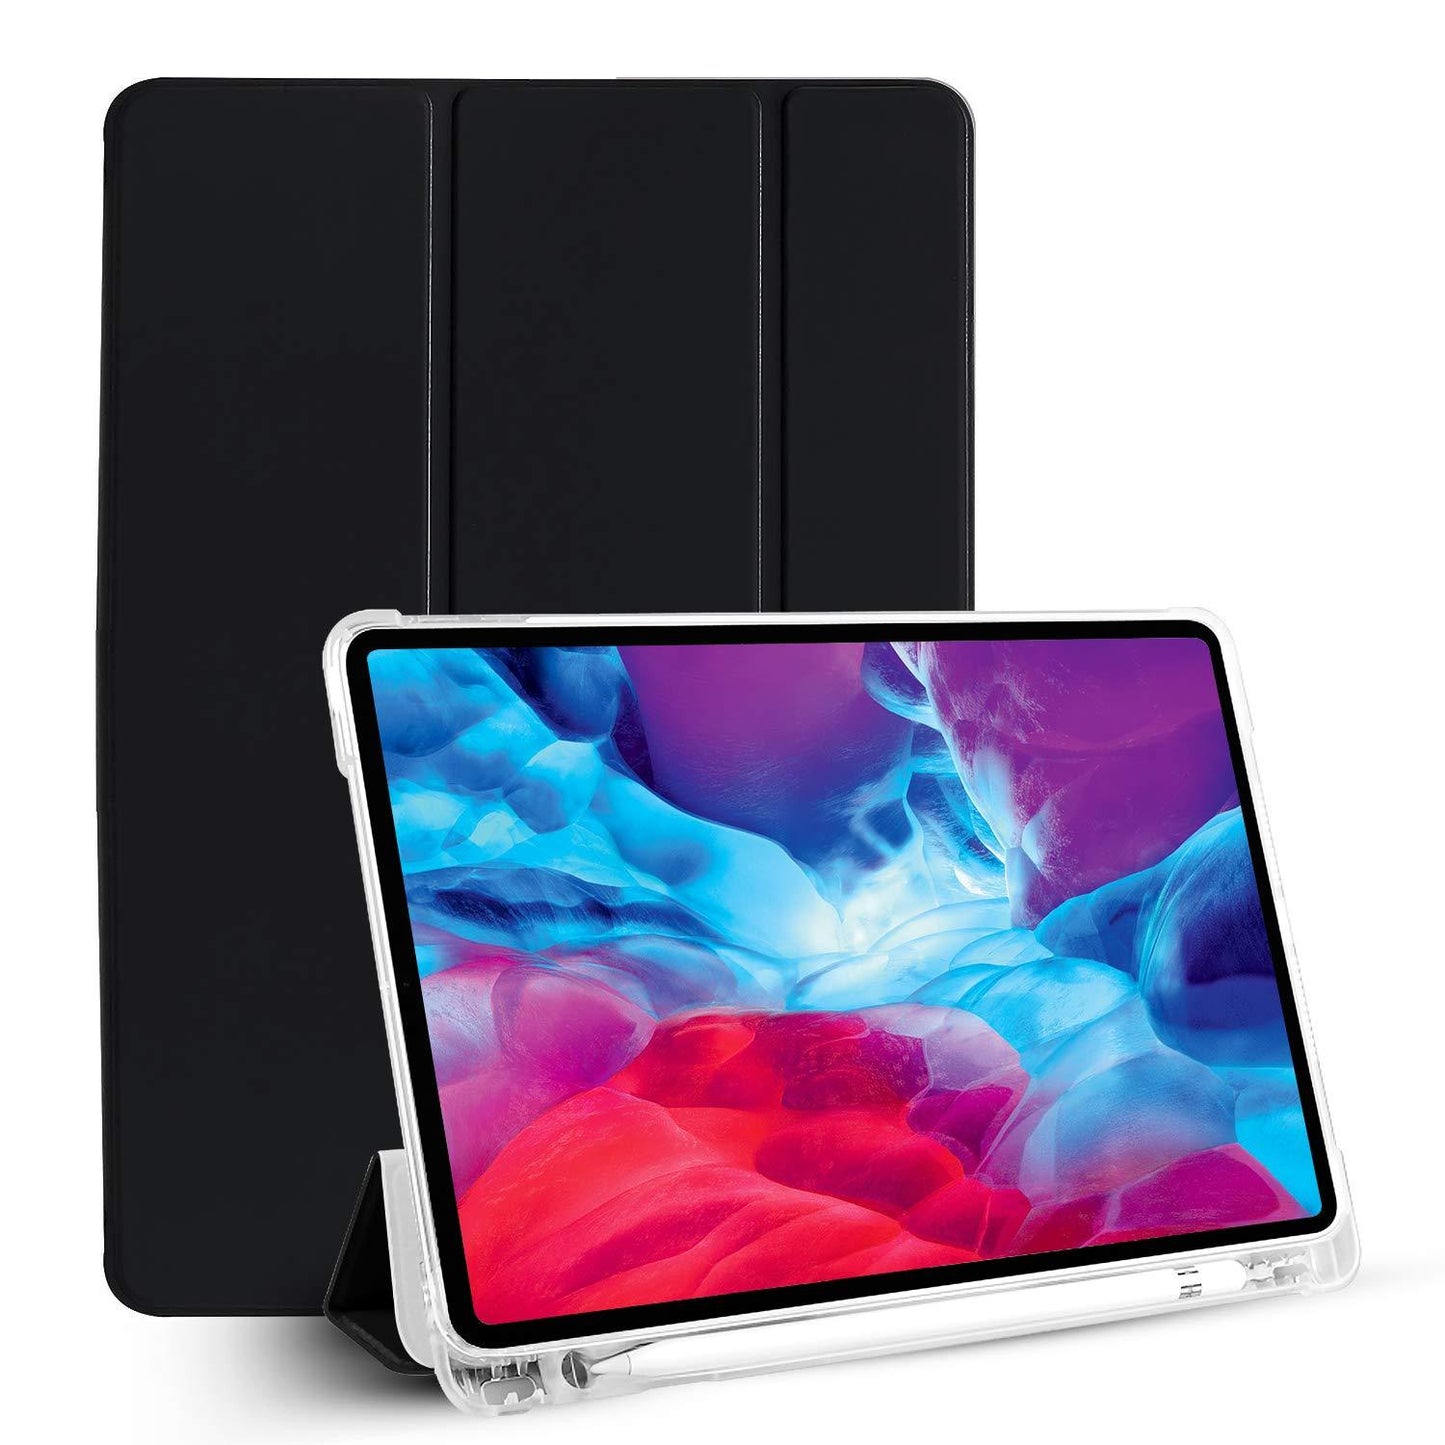 GRIPP Rhino Case for iPad Pro 12.9 2020 - Black